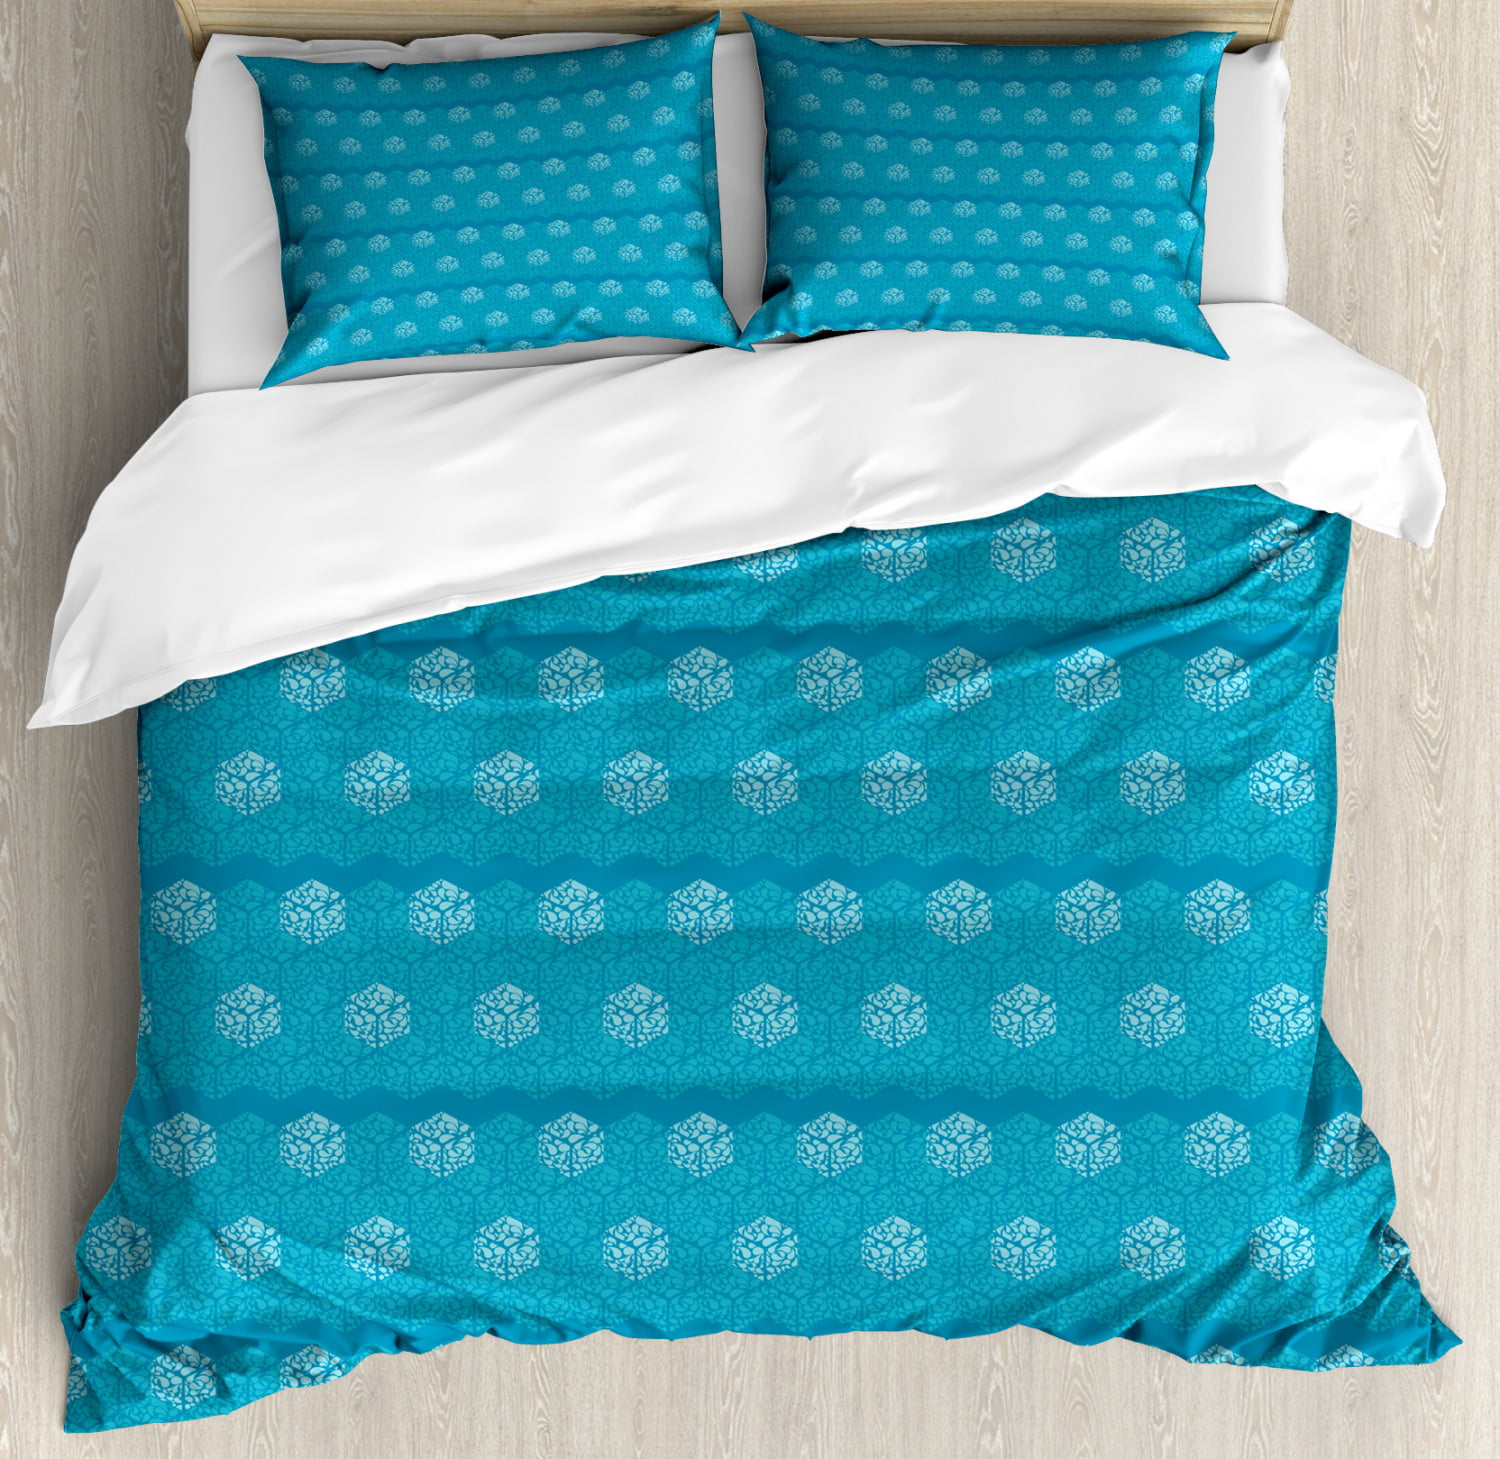 Geometric bedding aqua white duvet set bedding quilt cover pillow cases